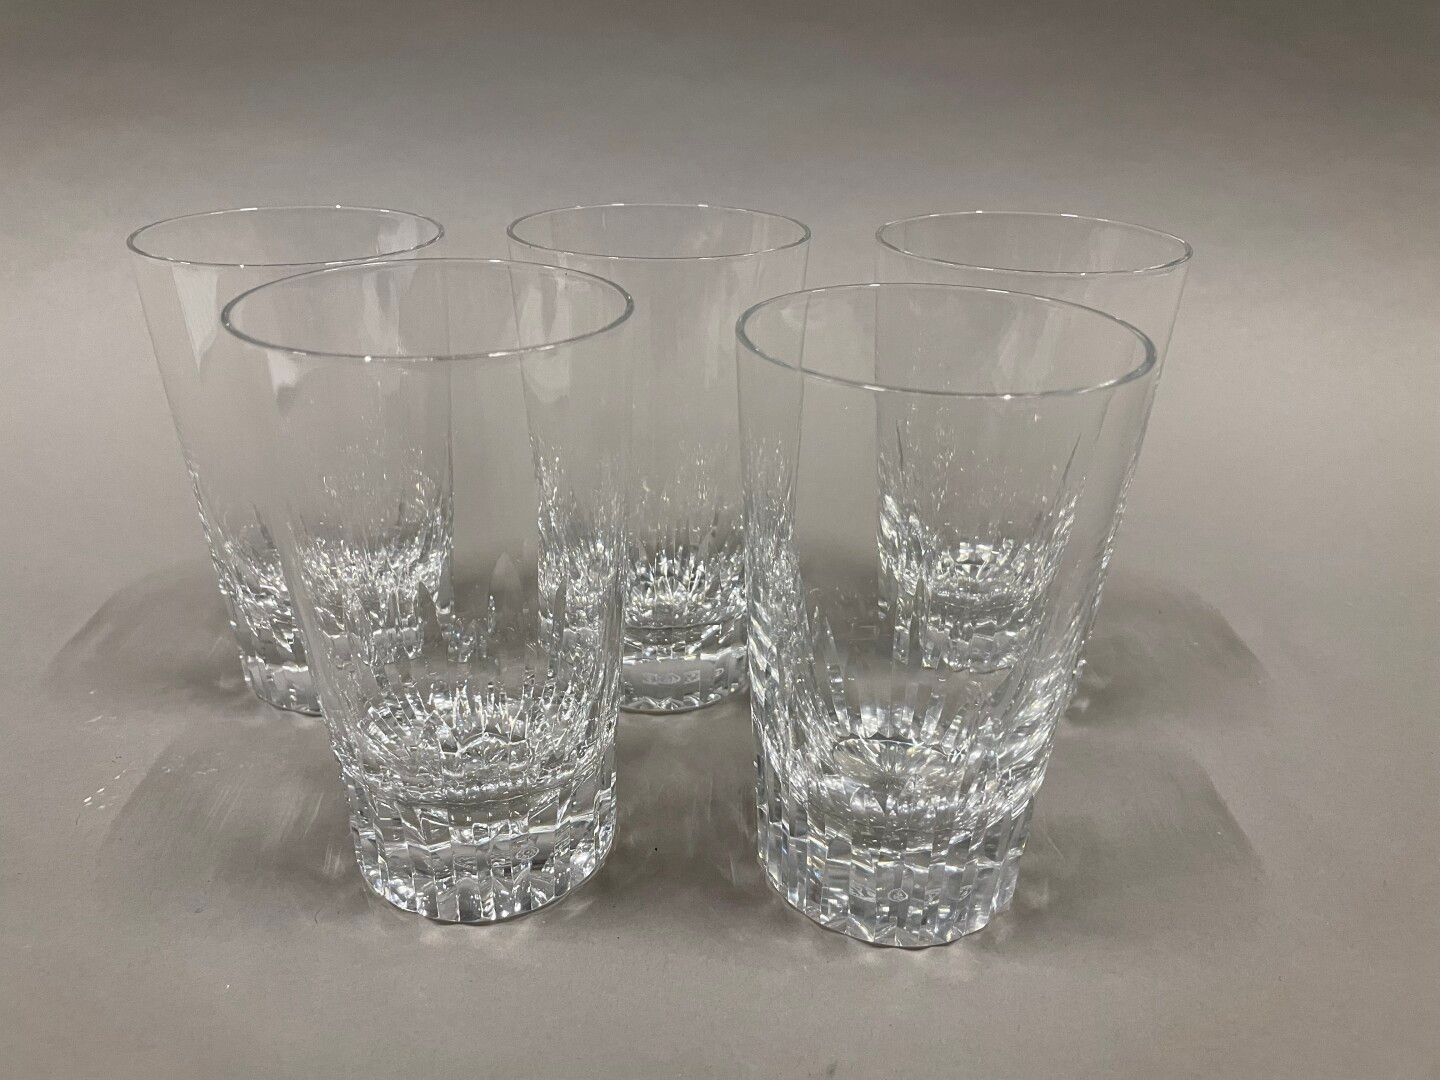 Null BACCARAT

Cinq verres à orangeade en cristal taillé

H : 12,5 cm